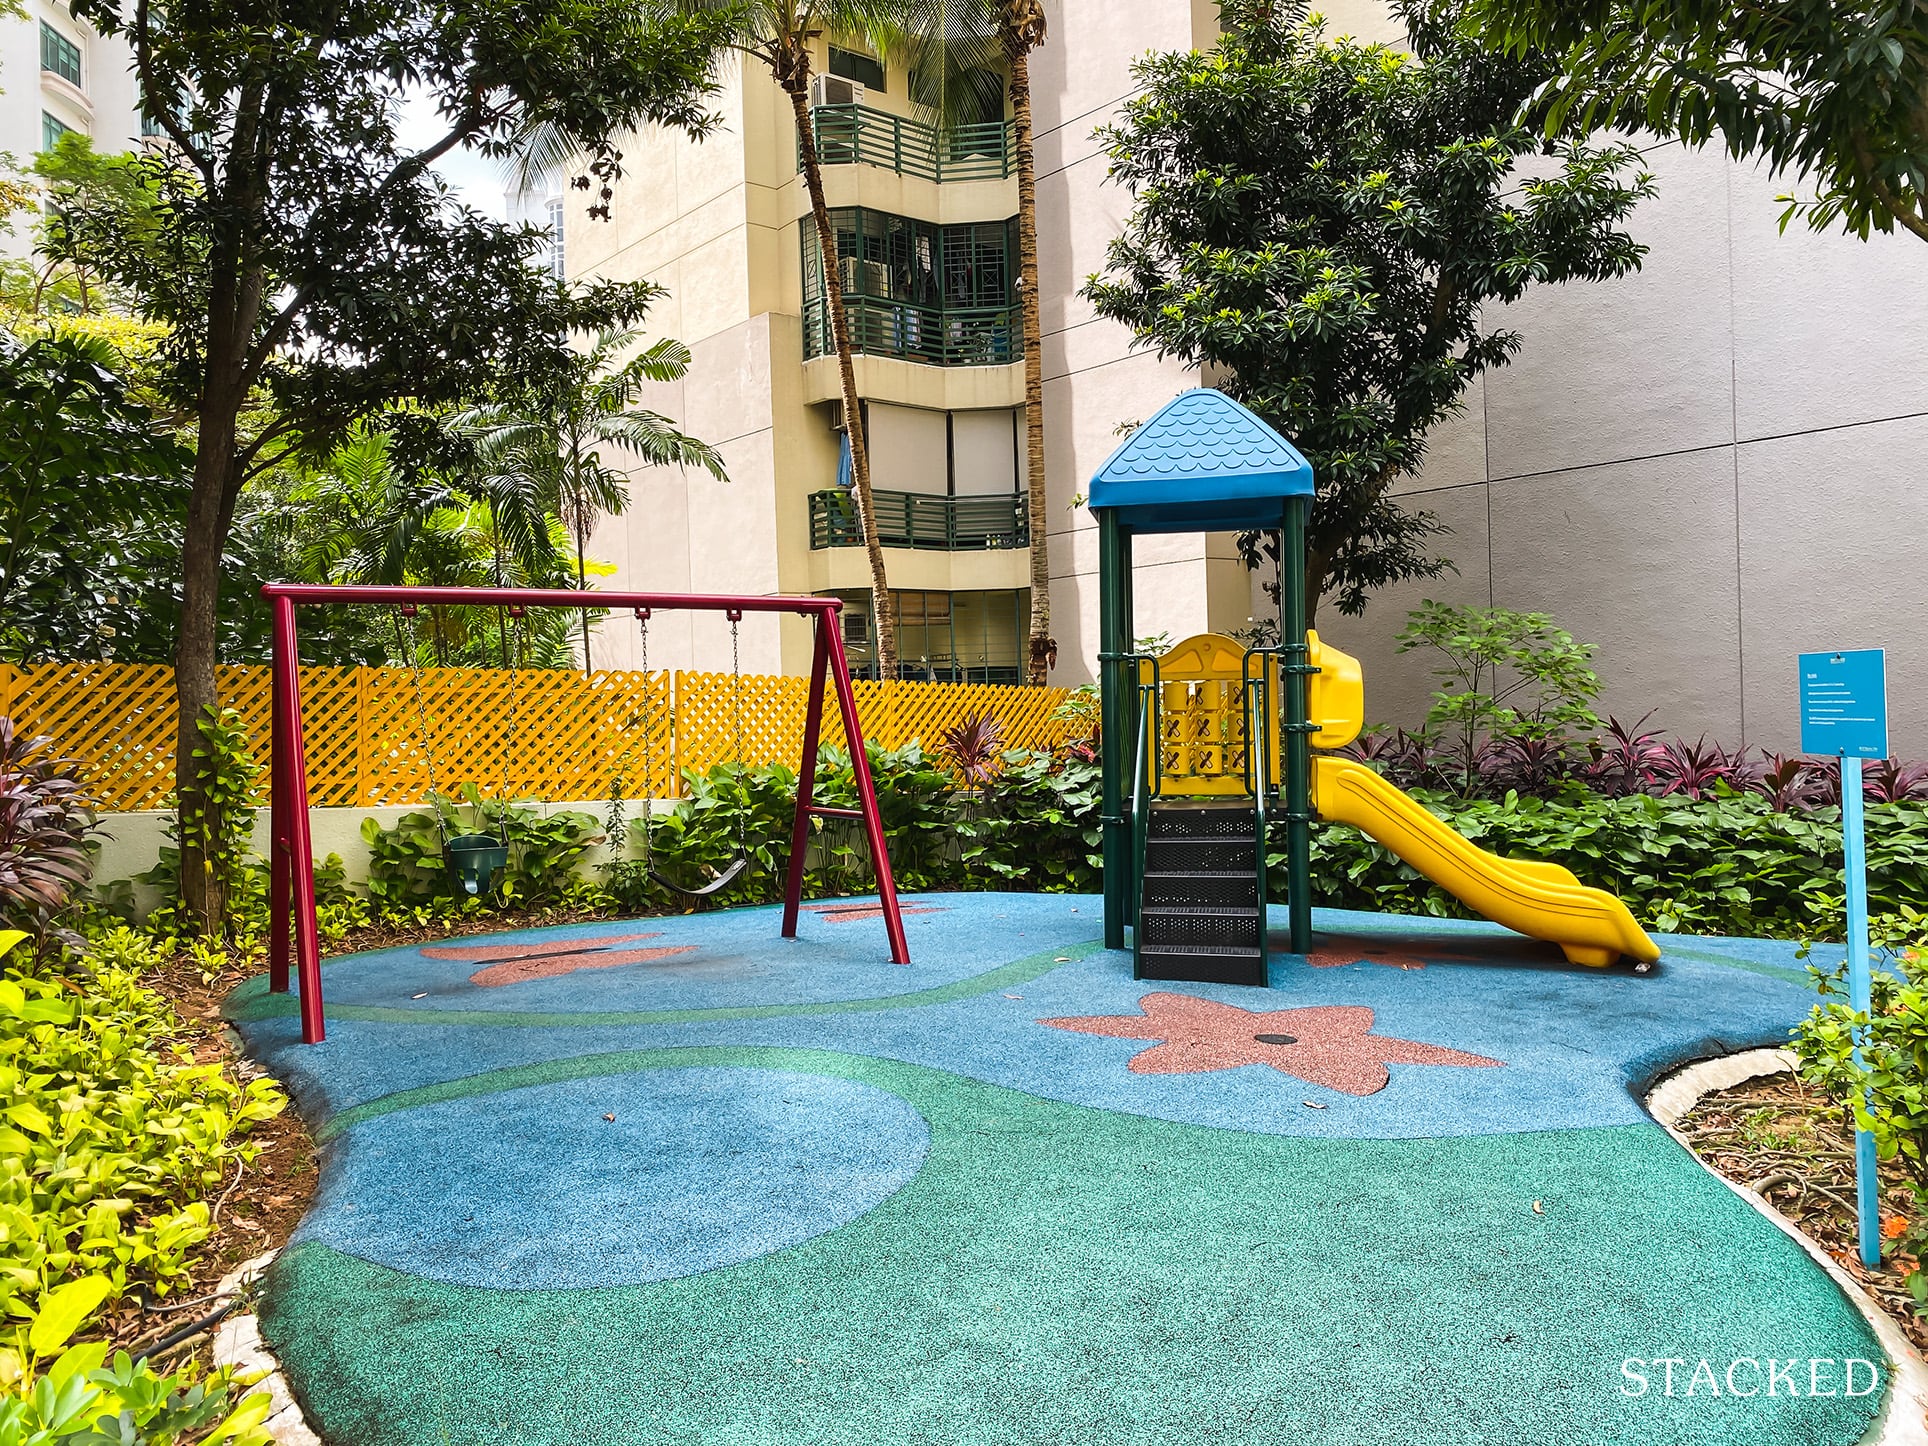 Signature Park playground